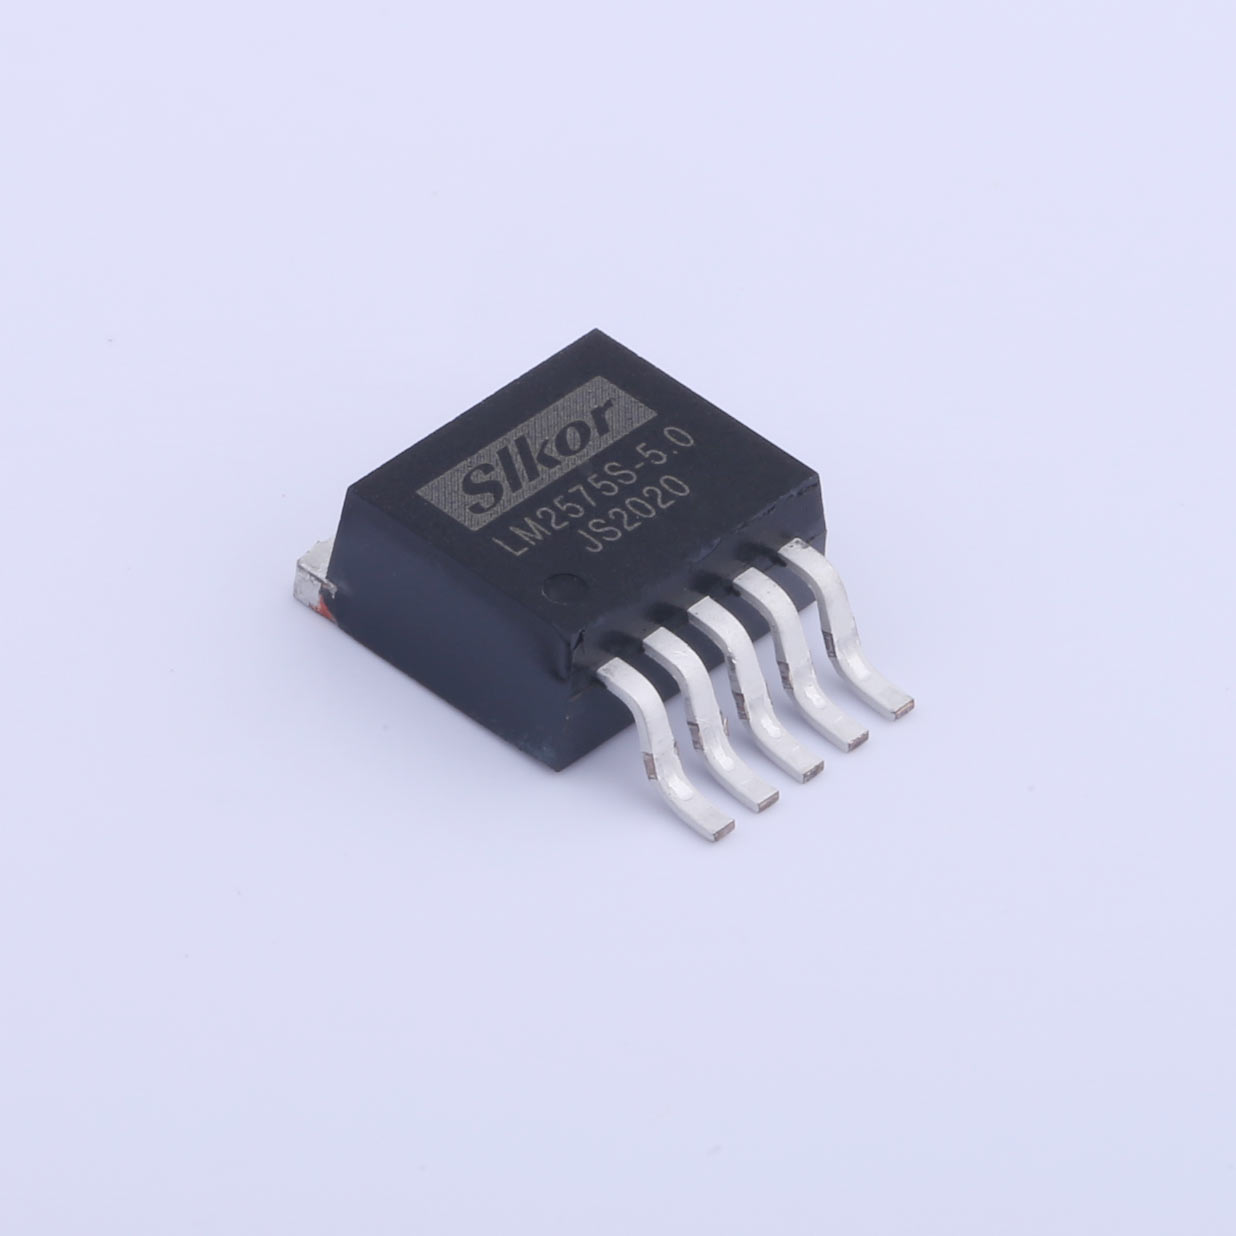 LM2575S-5.0 1A 3A Miniconverter Switching Regulators